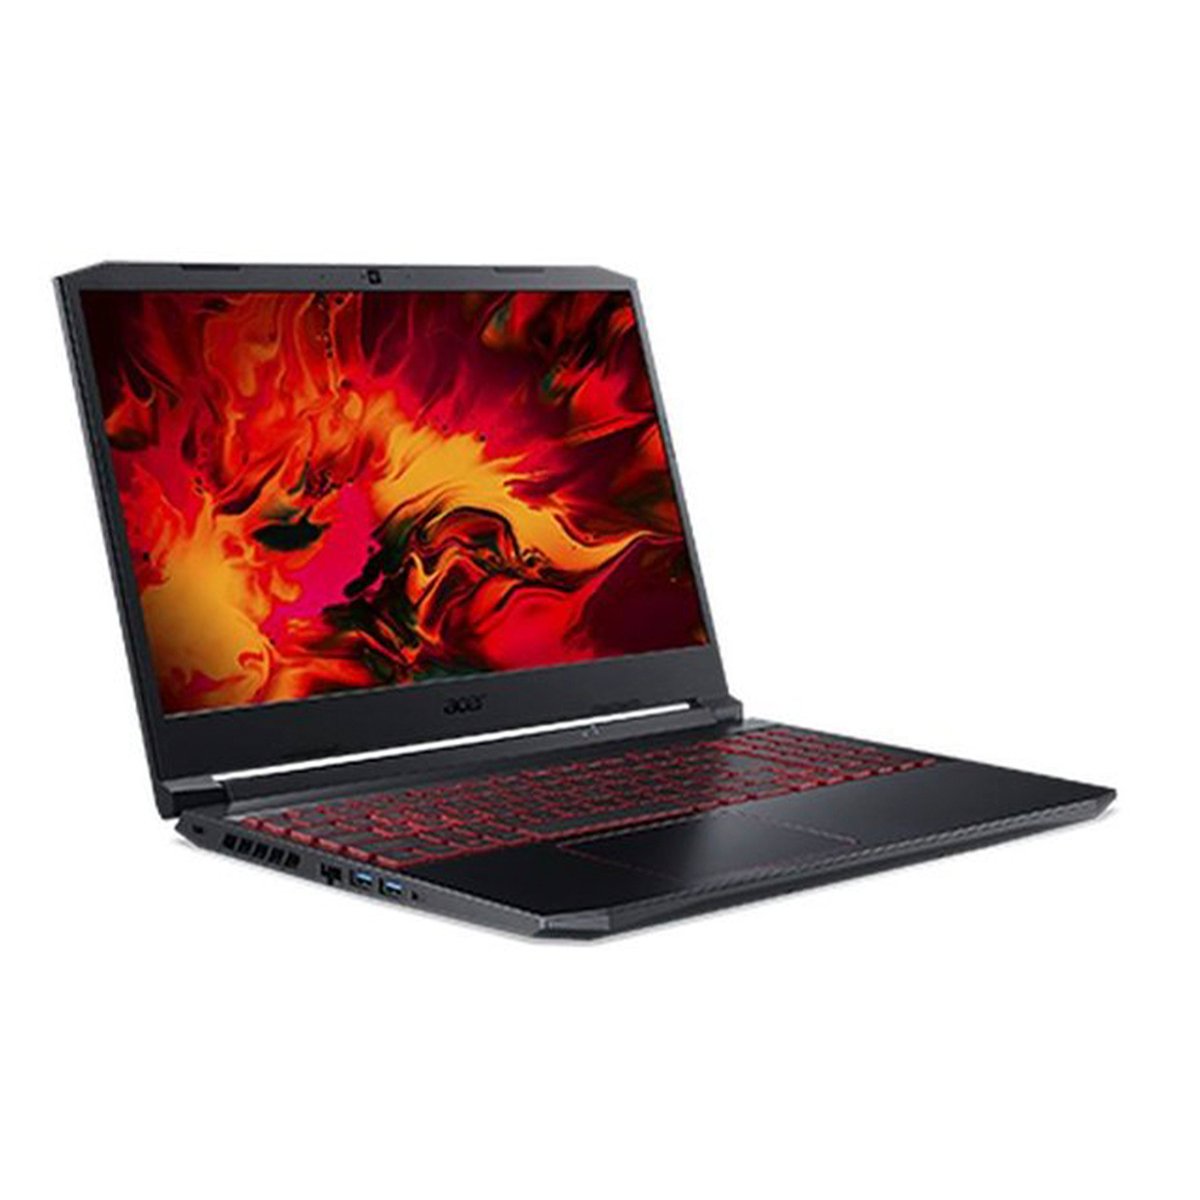 Acer Nitro 5 AN515-44-R1QC Gaming Laptop,AMD Ryzen™ 5 4600H,8GB RAM,1TB,4GB NVIDIA® GeForce® GTX 1650,Windows10,15.6inch,Black